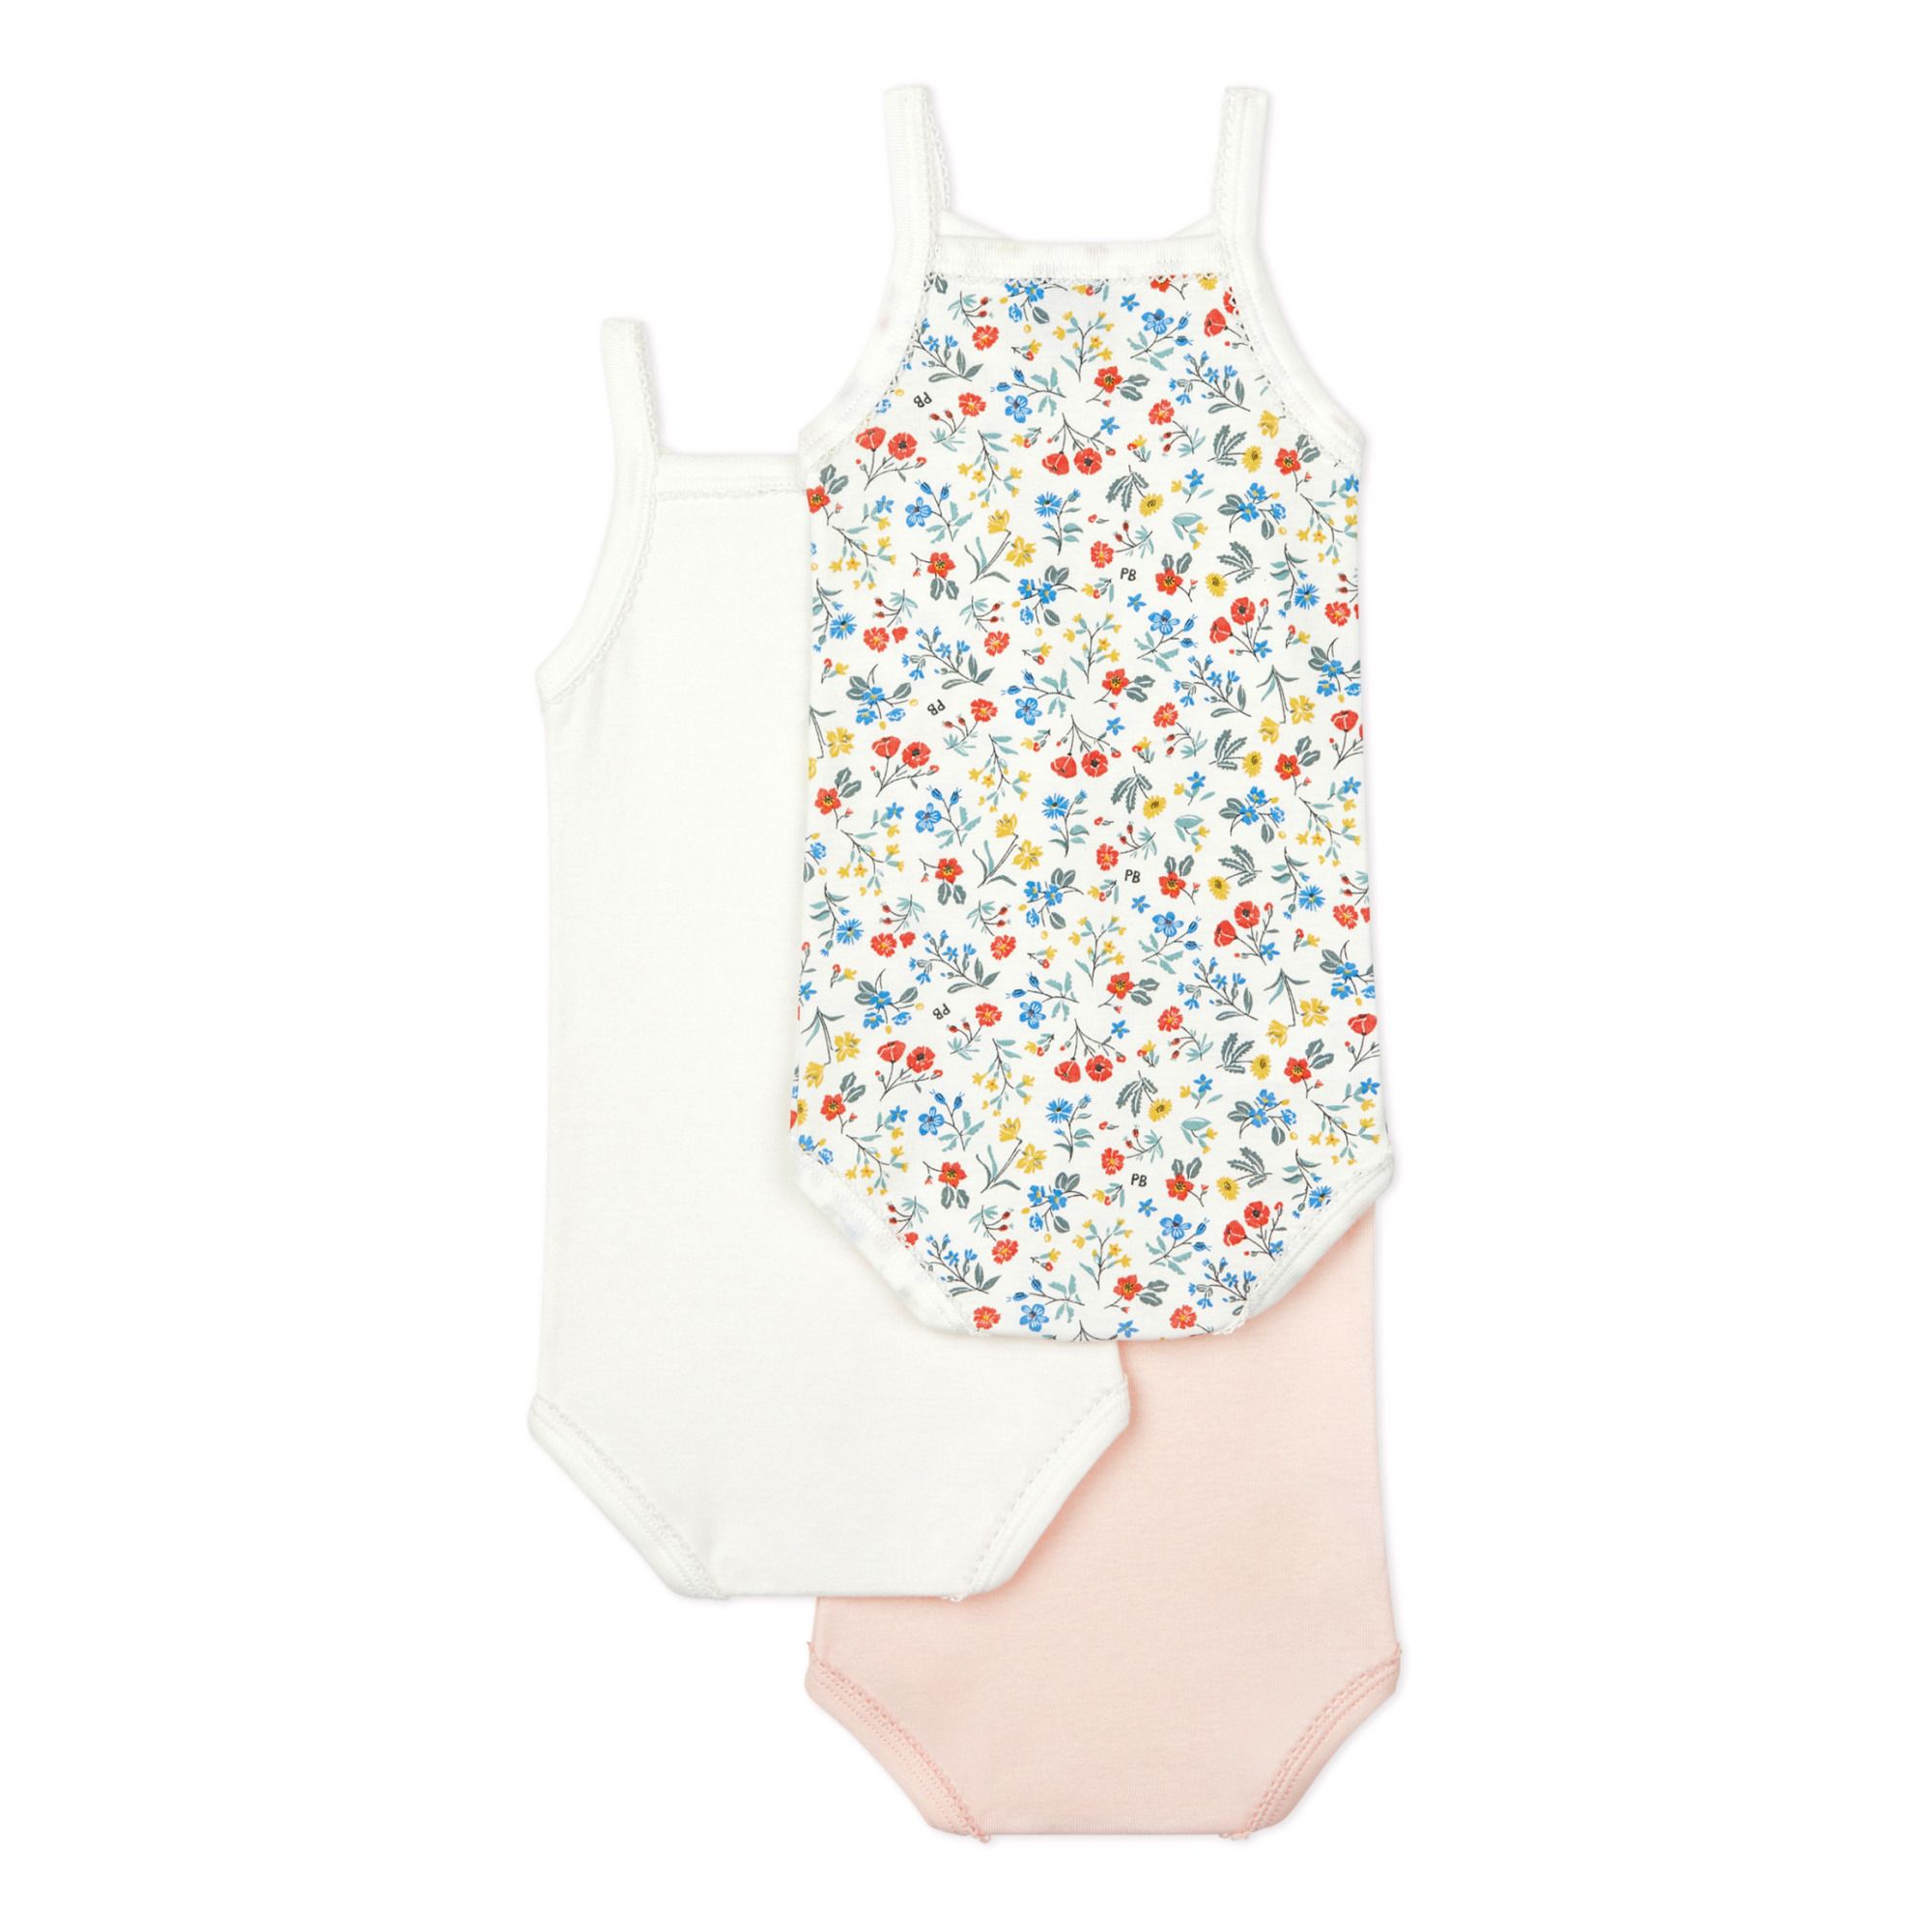 3 piece Ecru Brand new Baby Patterned Sleeveless Sleep Body suits in Girls /Boys 